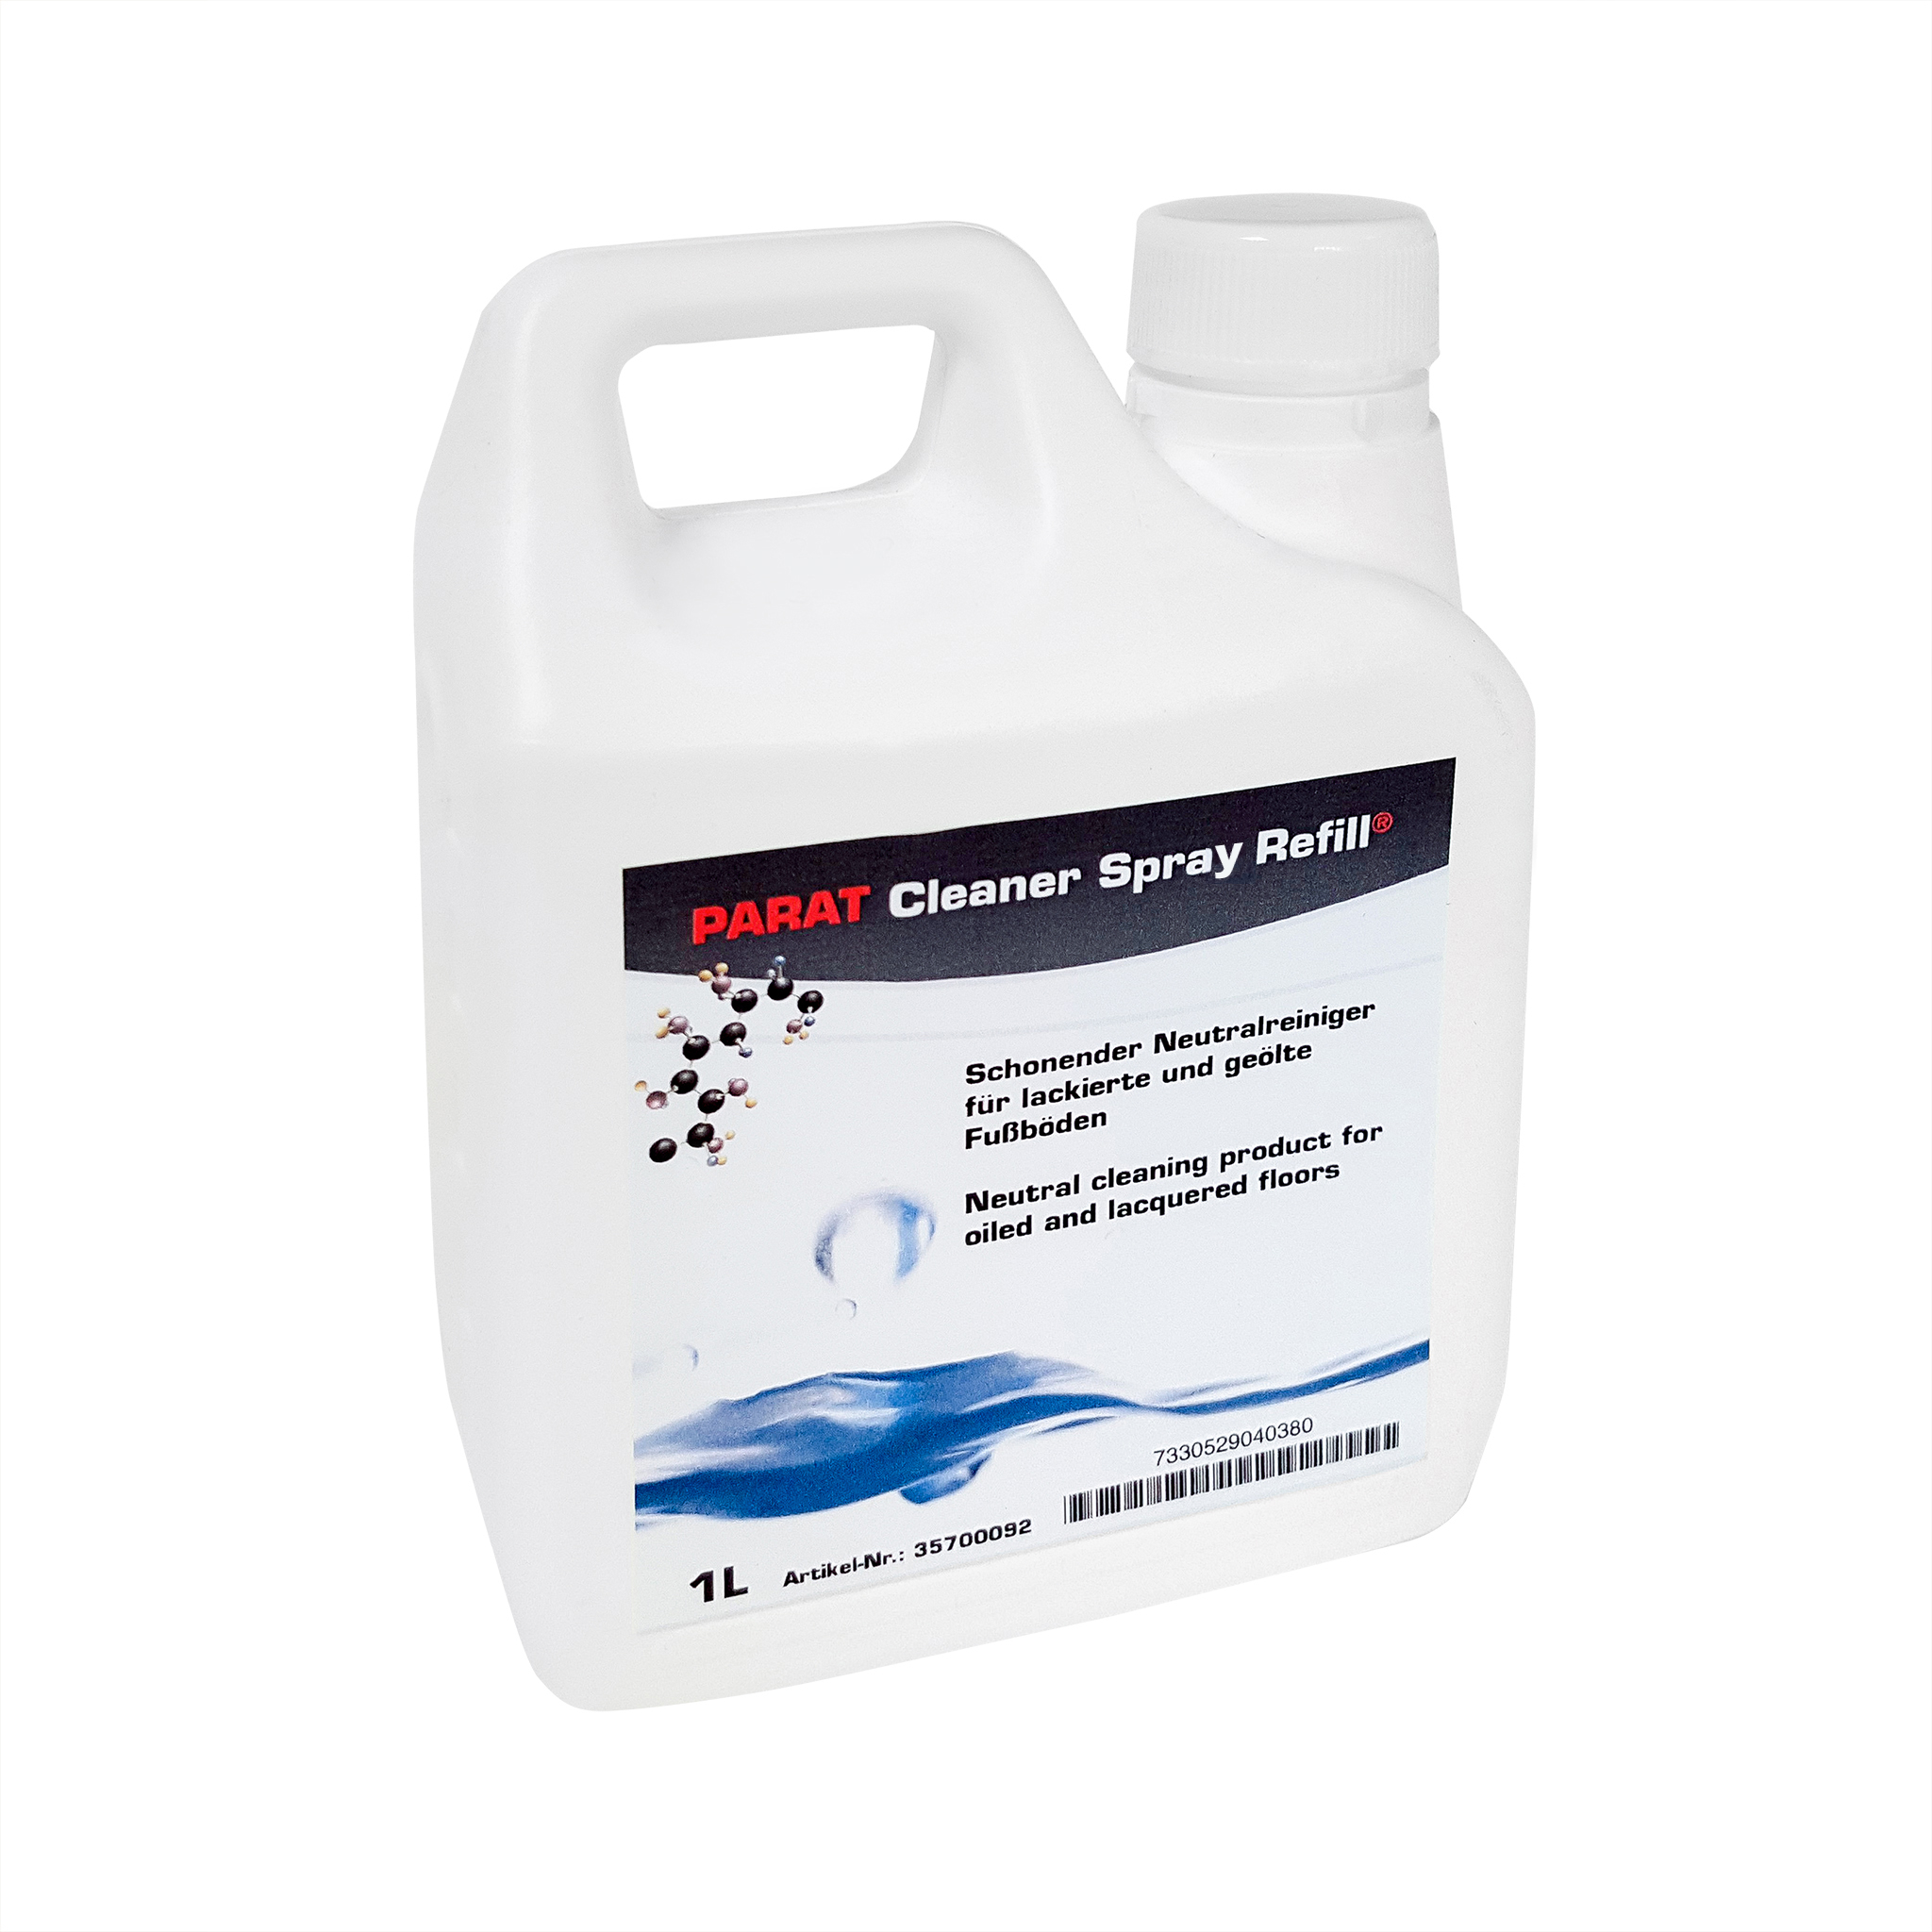 PARAT Cleaner Spray Refill Reiniger